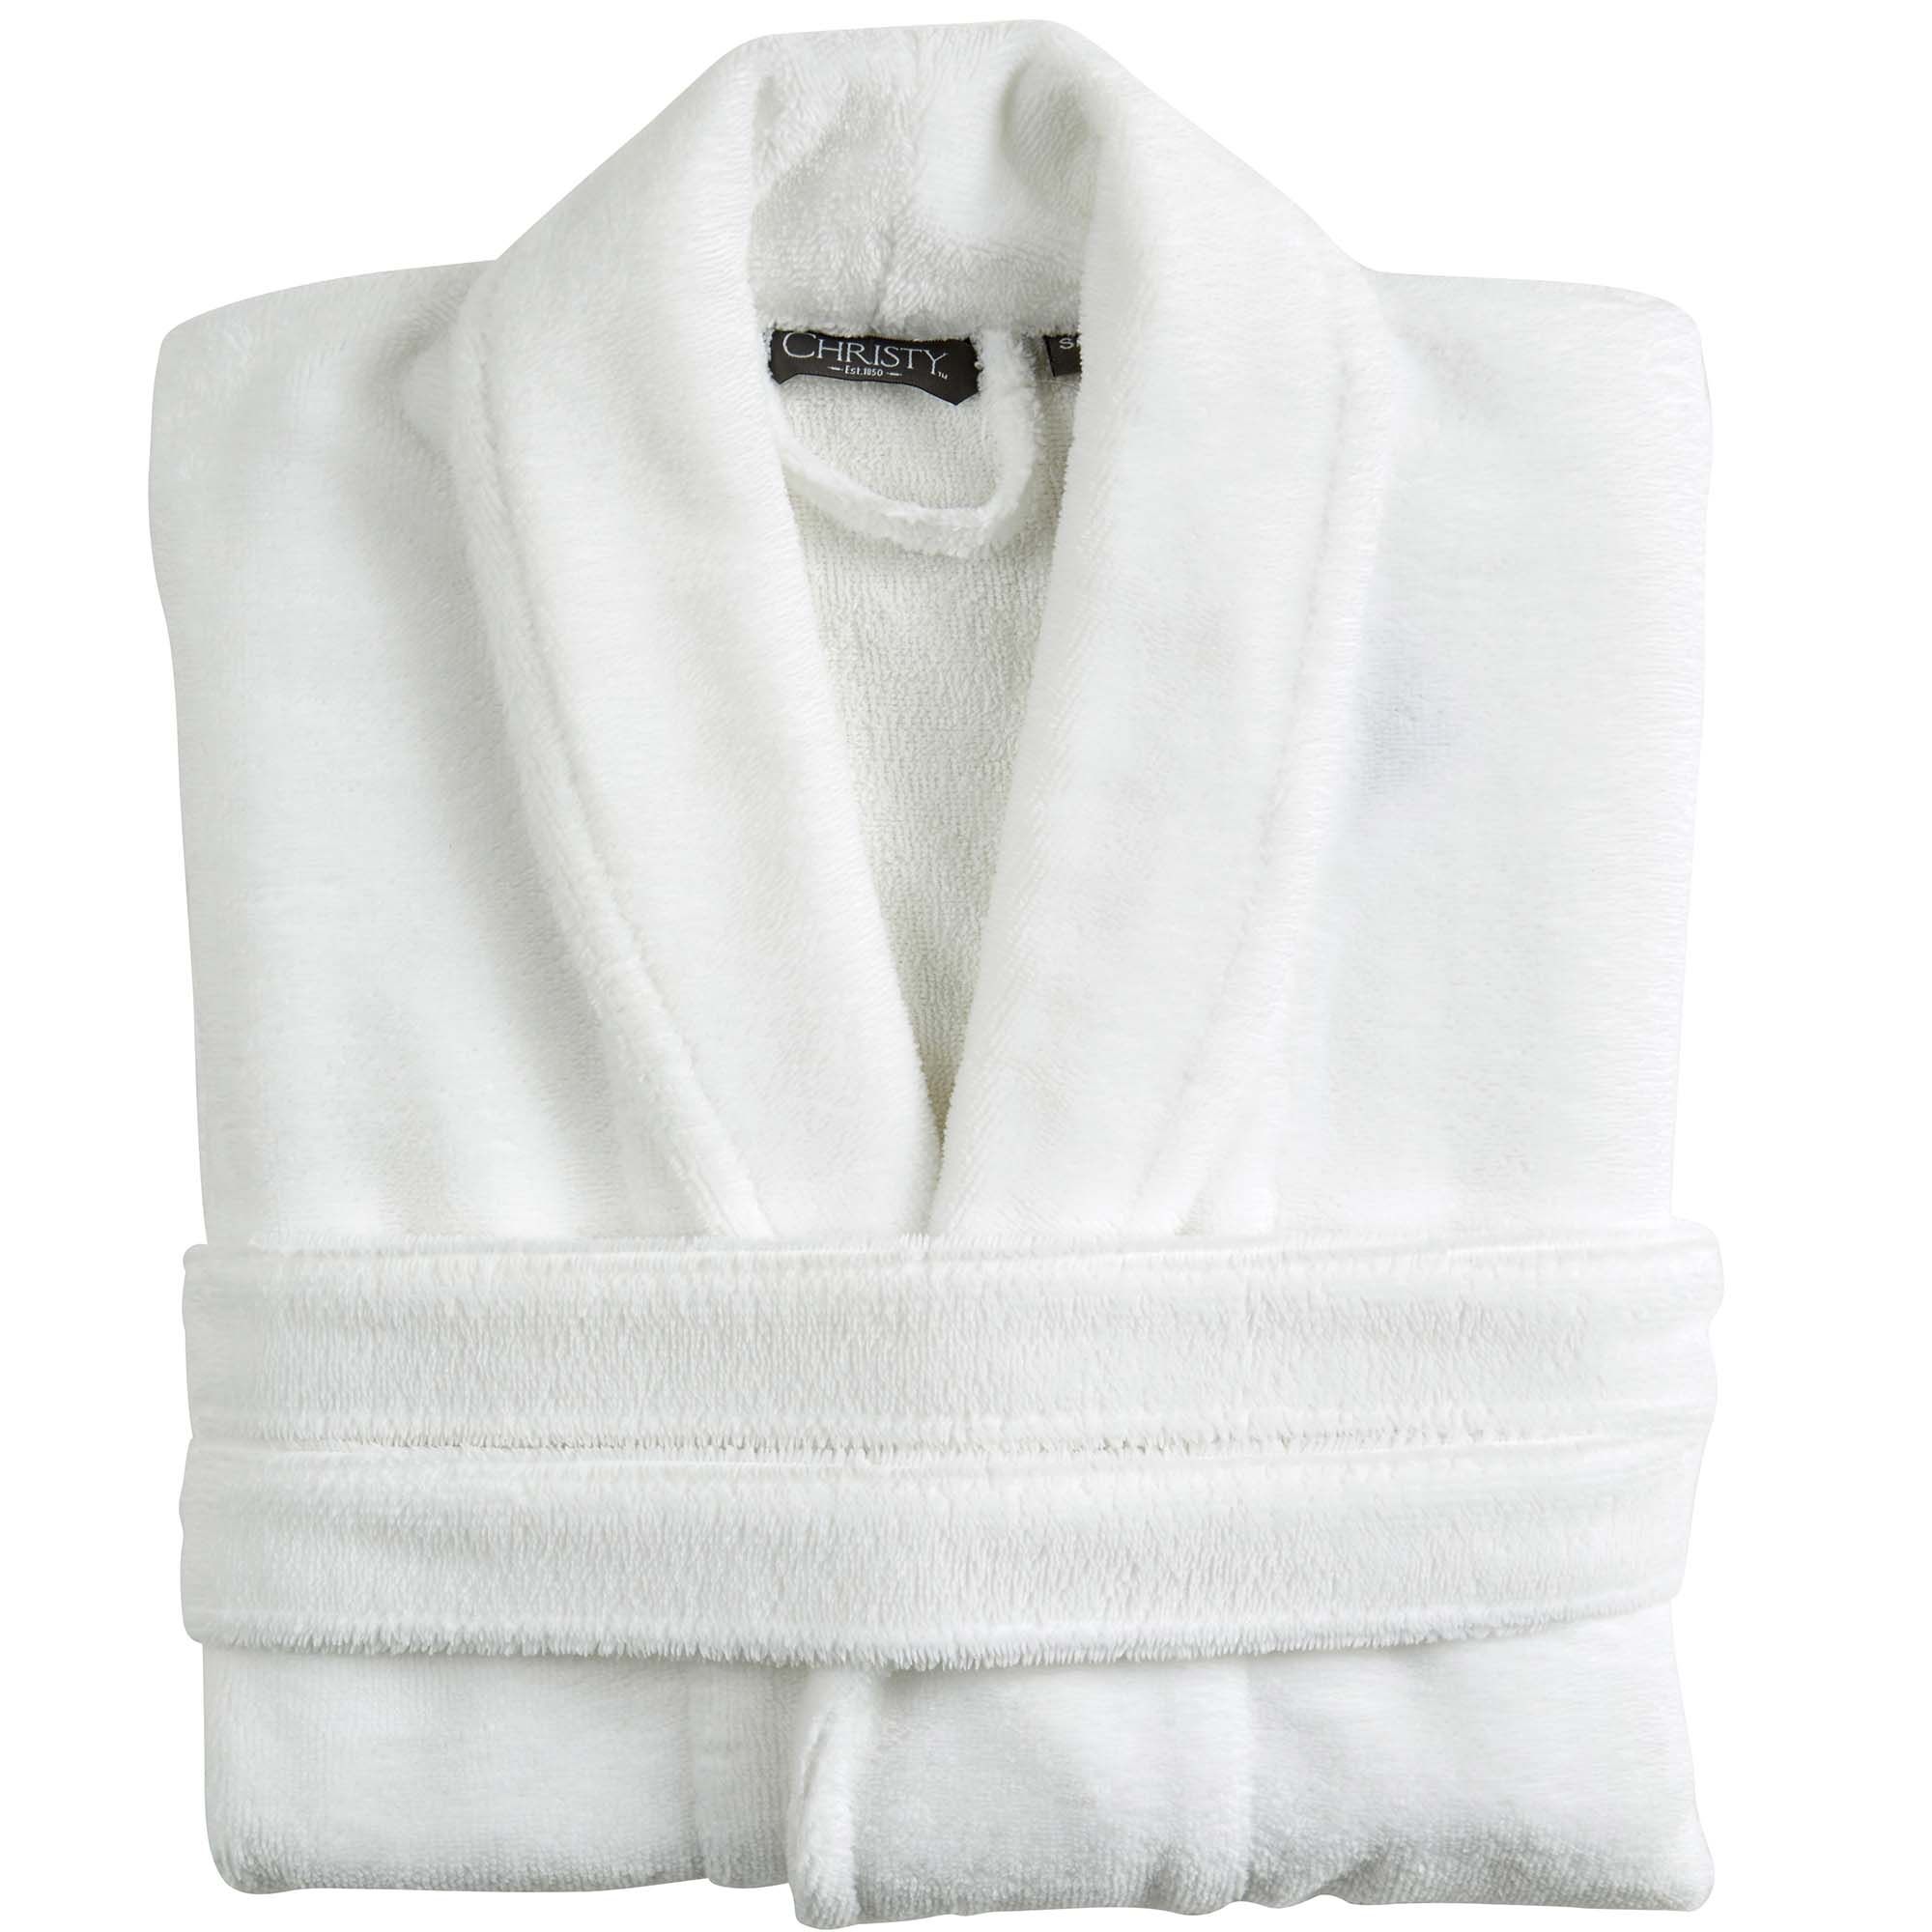 Christy Cosy Robe Small/Medium White - Bath Robes - Meubles